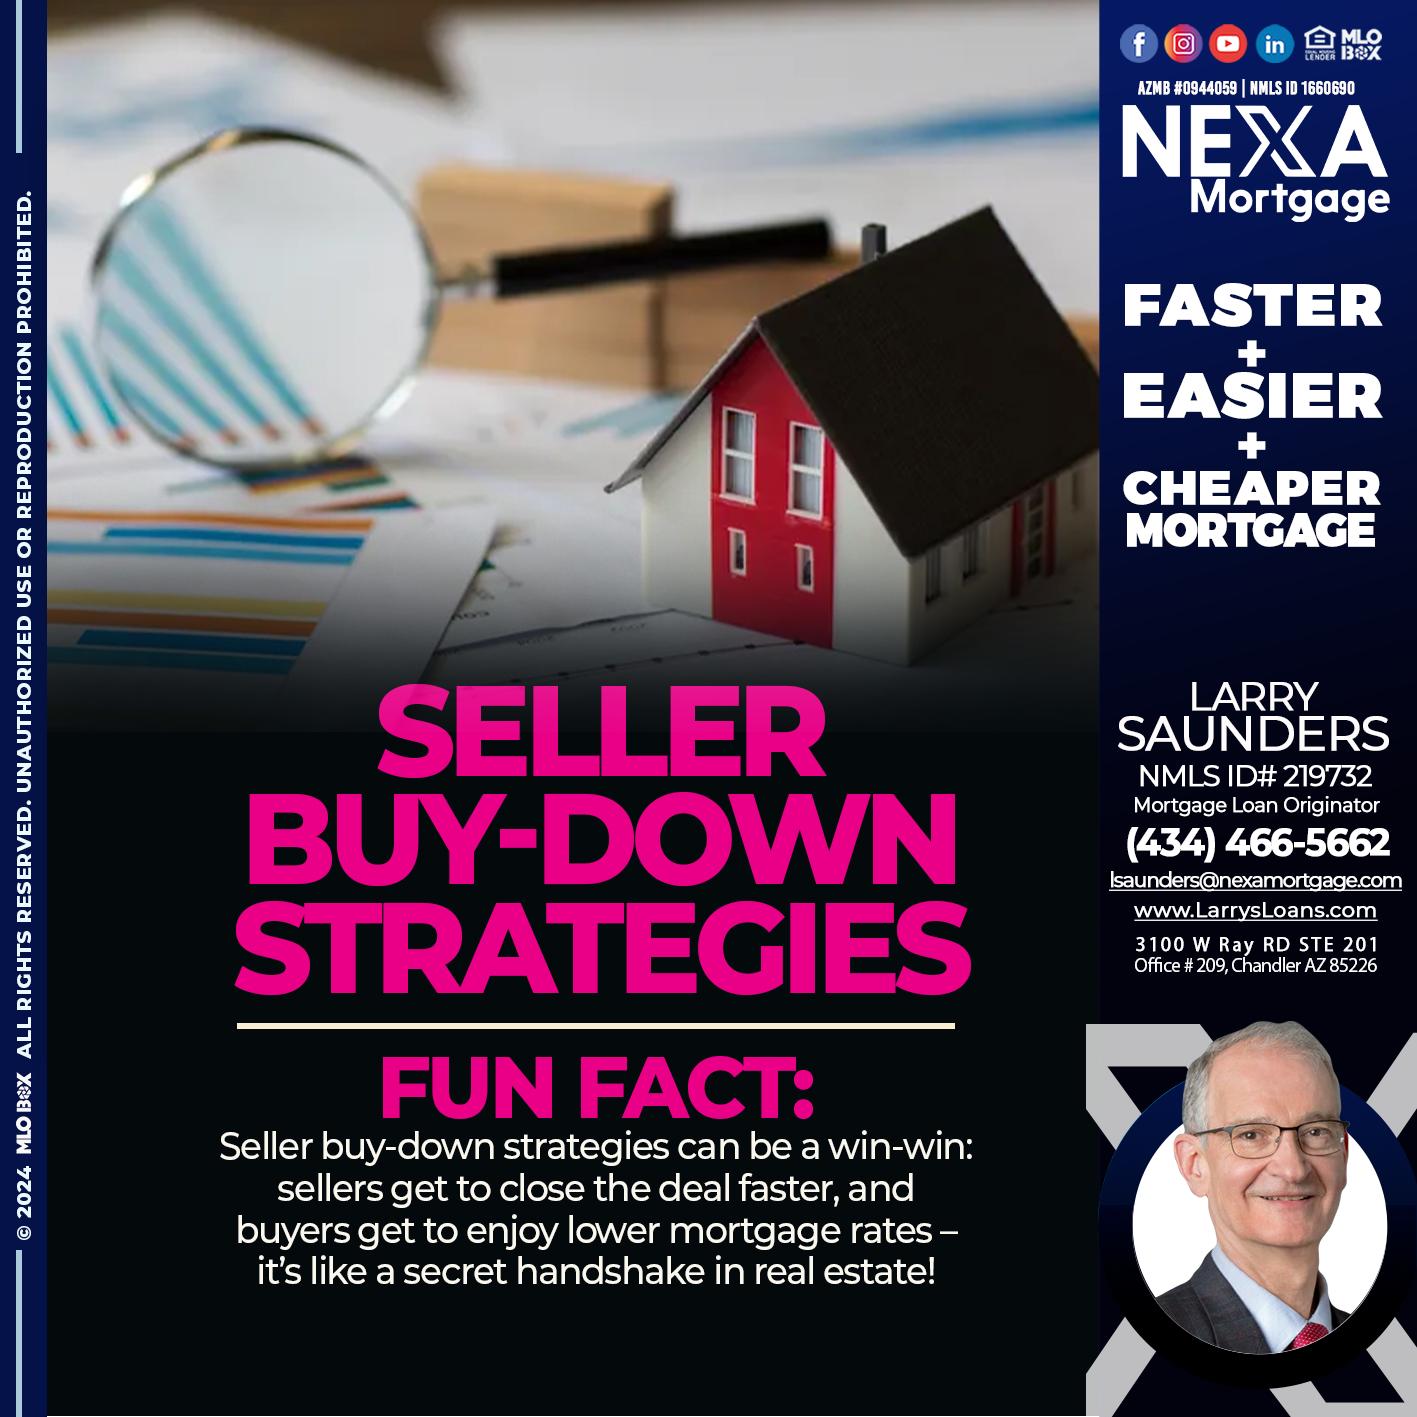 seller - Larry Saunders -Mortgage Loan Originator